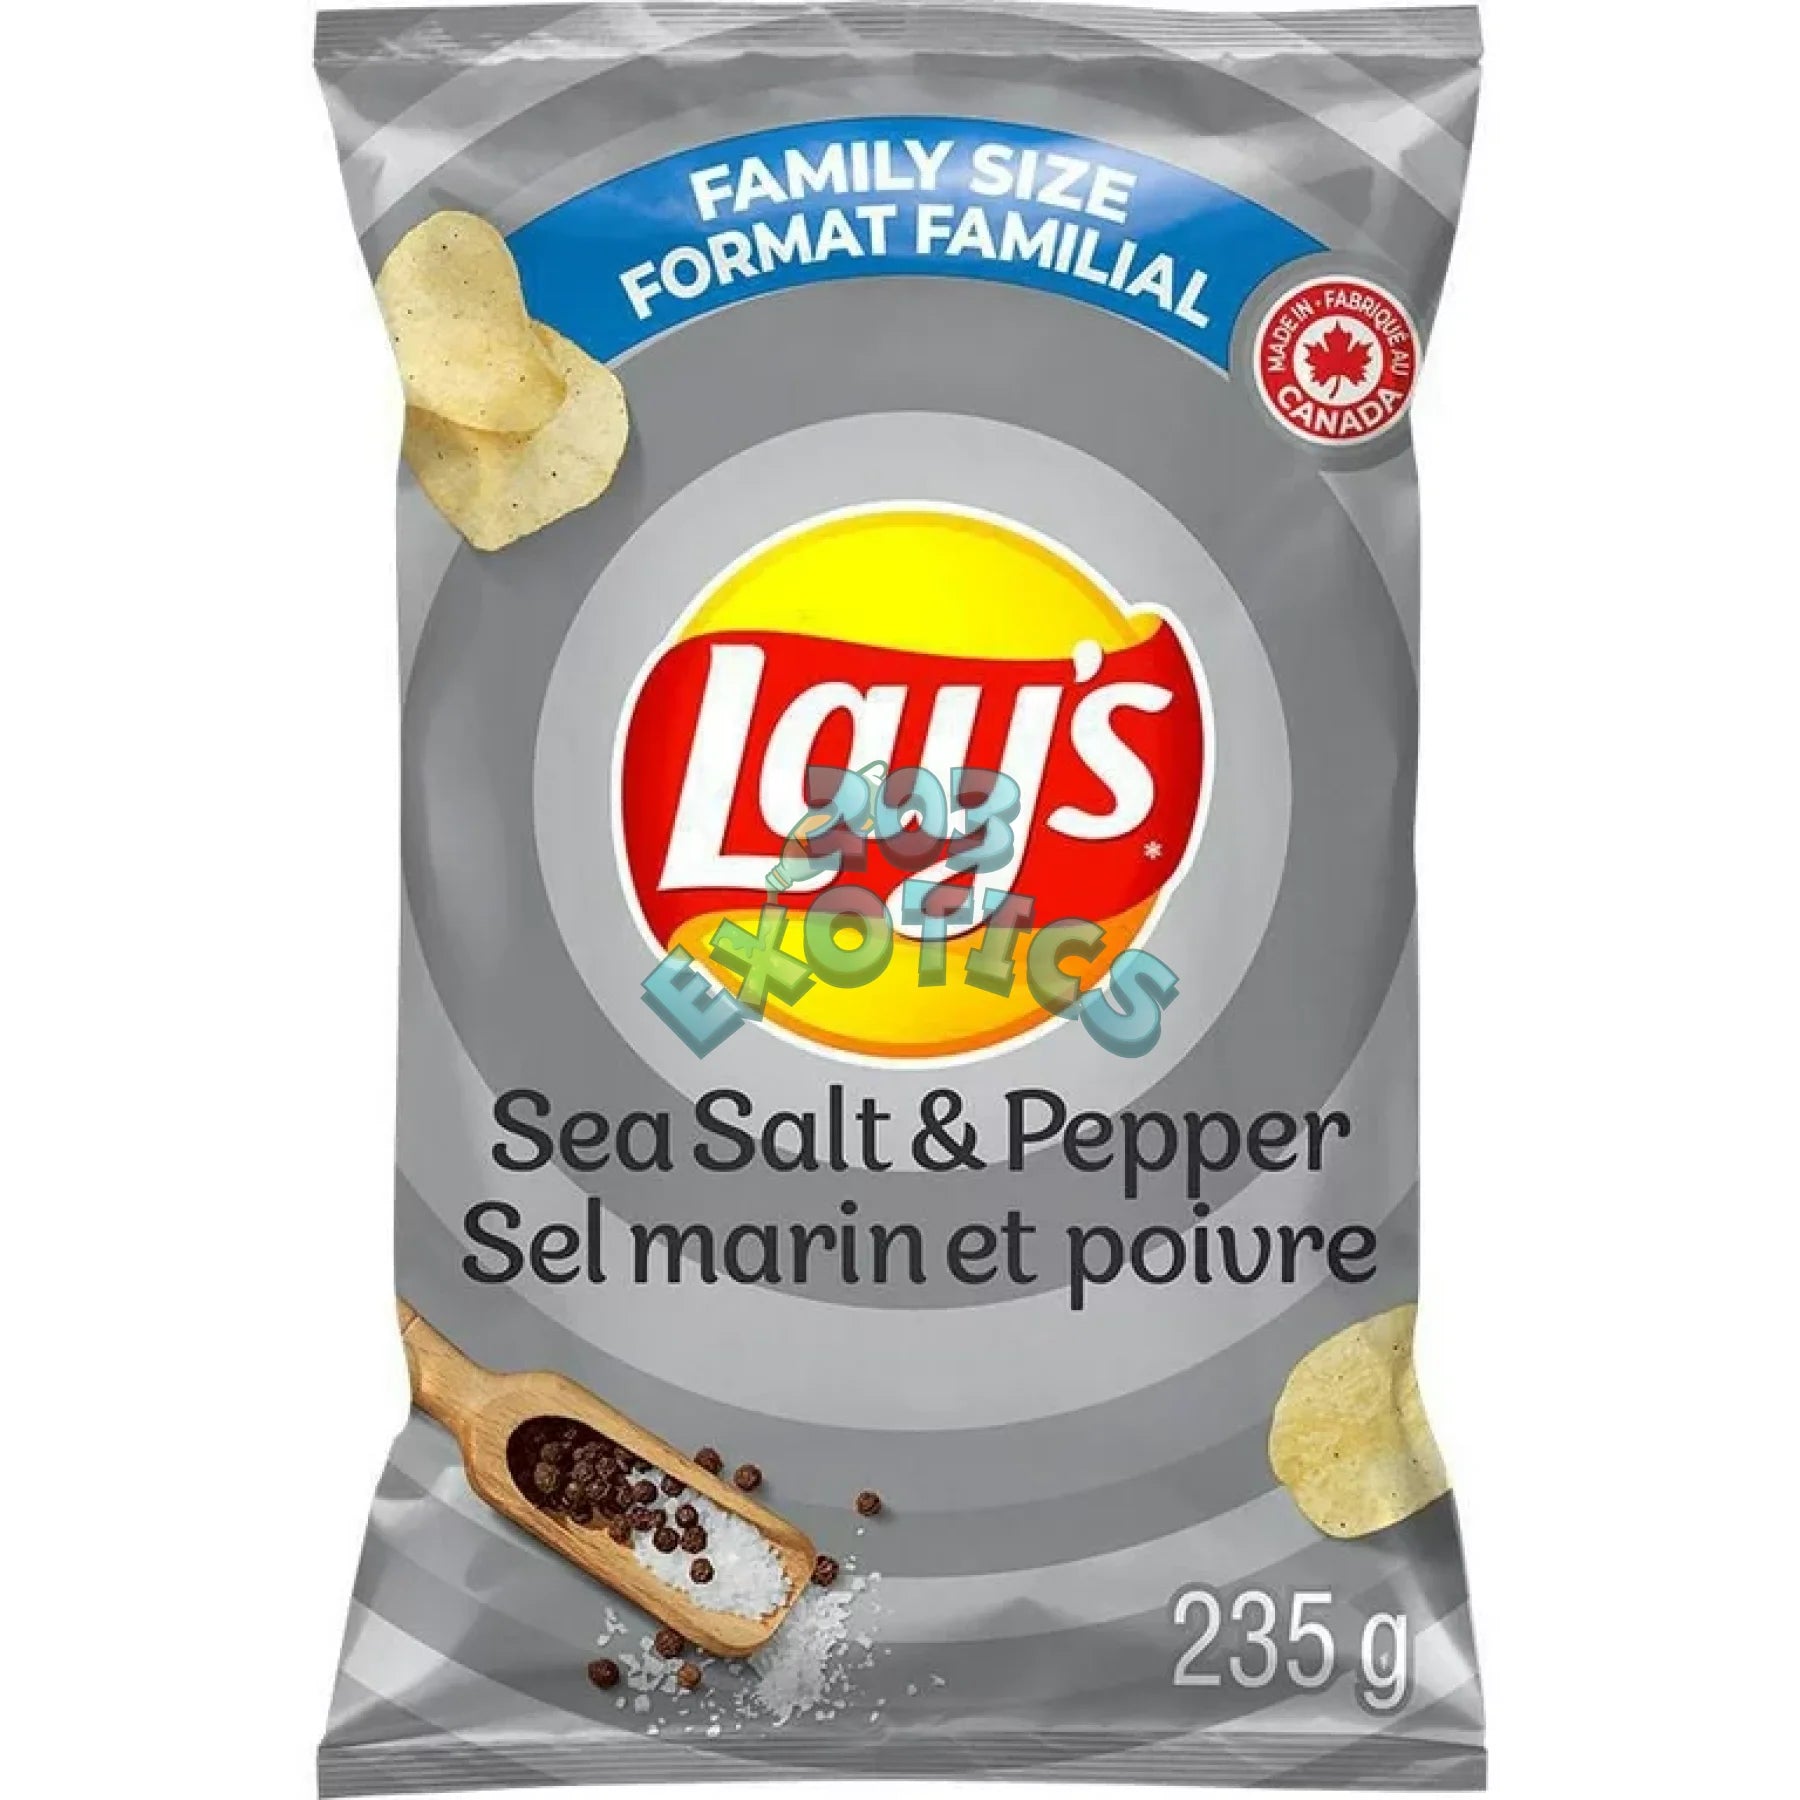 Lay’s Sea Salt & Pepper (235G) (Gluten Free)